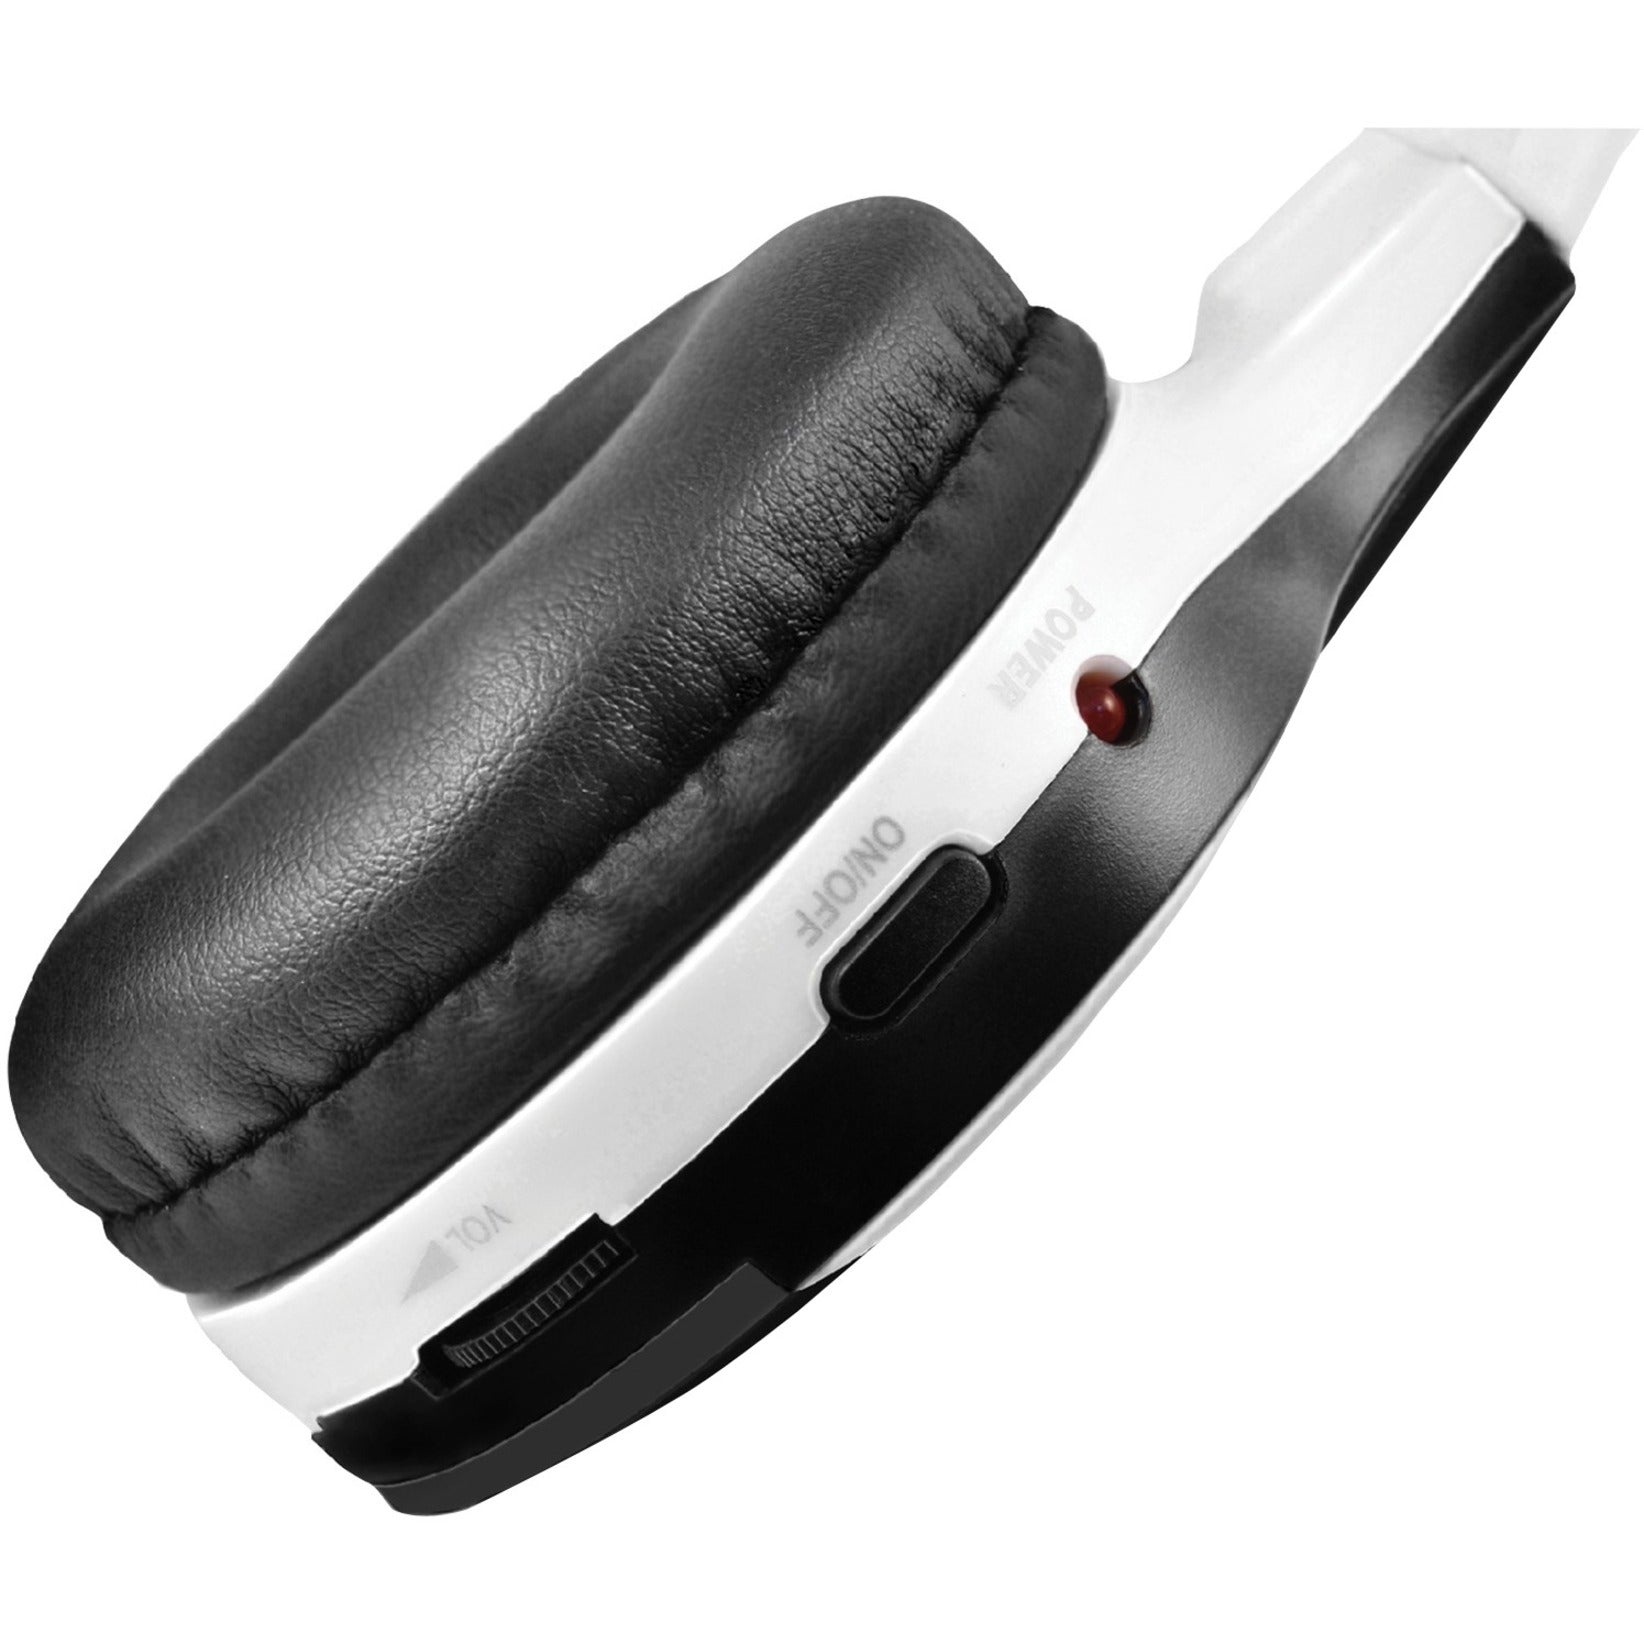 XOVision IR630BL Universal IR Wireless Foldable Headphones, Rechargeable Battery, Adjustable Headband, Black